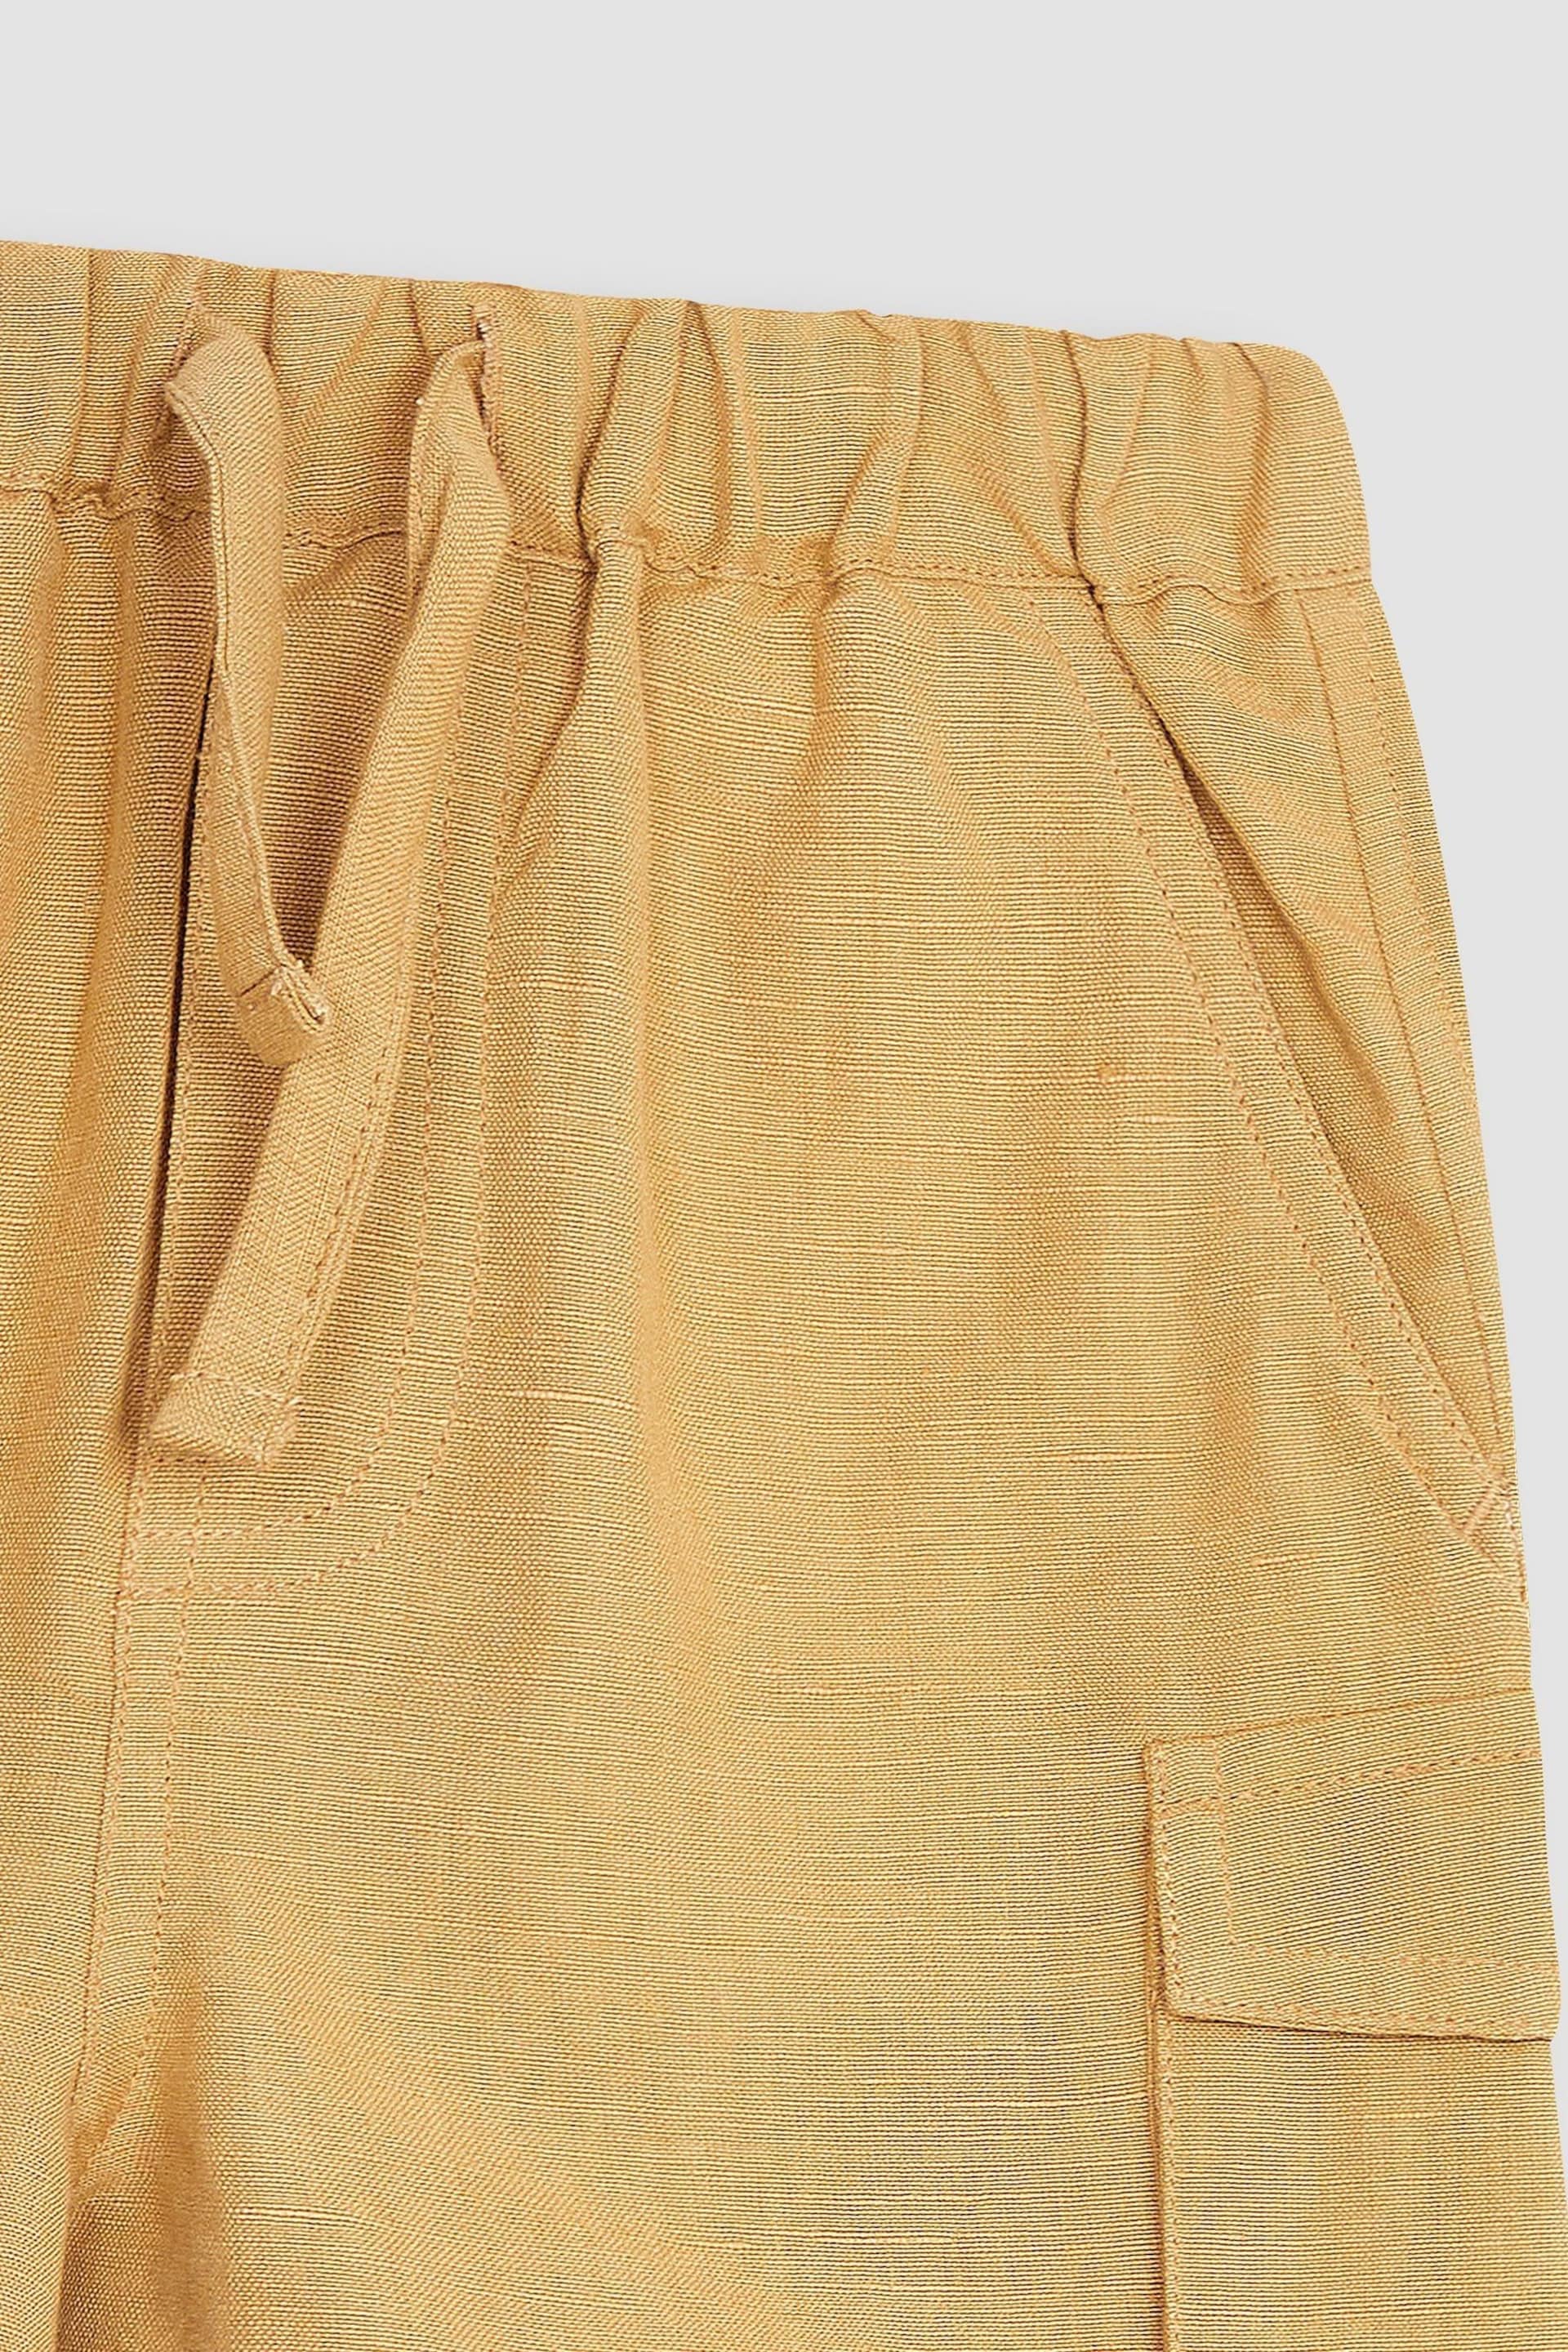 JoJo Maman Bébé Camel Cotton Linen Summer Shorts - Image 2 of 3